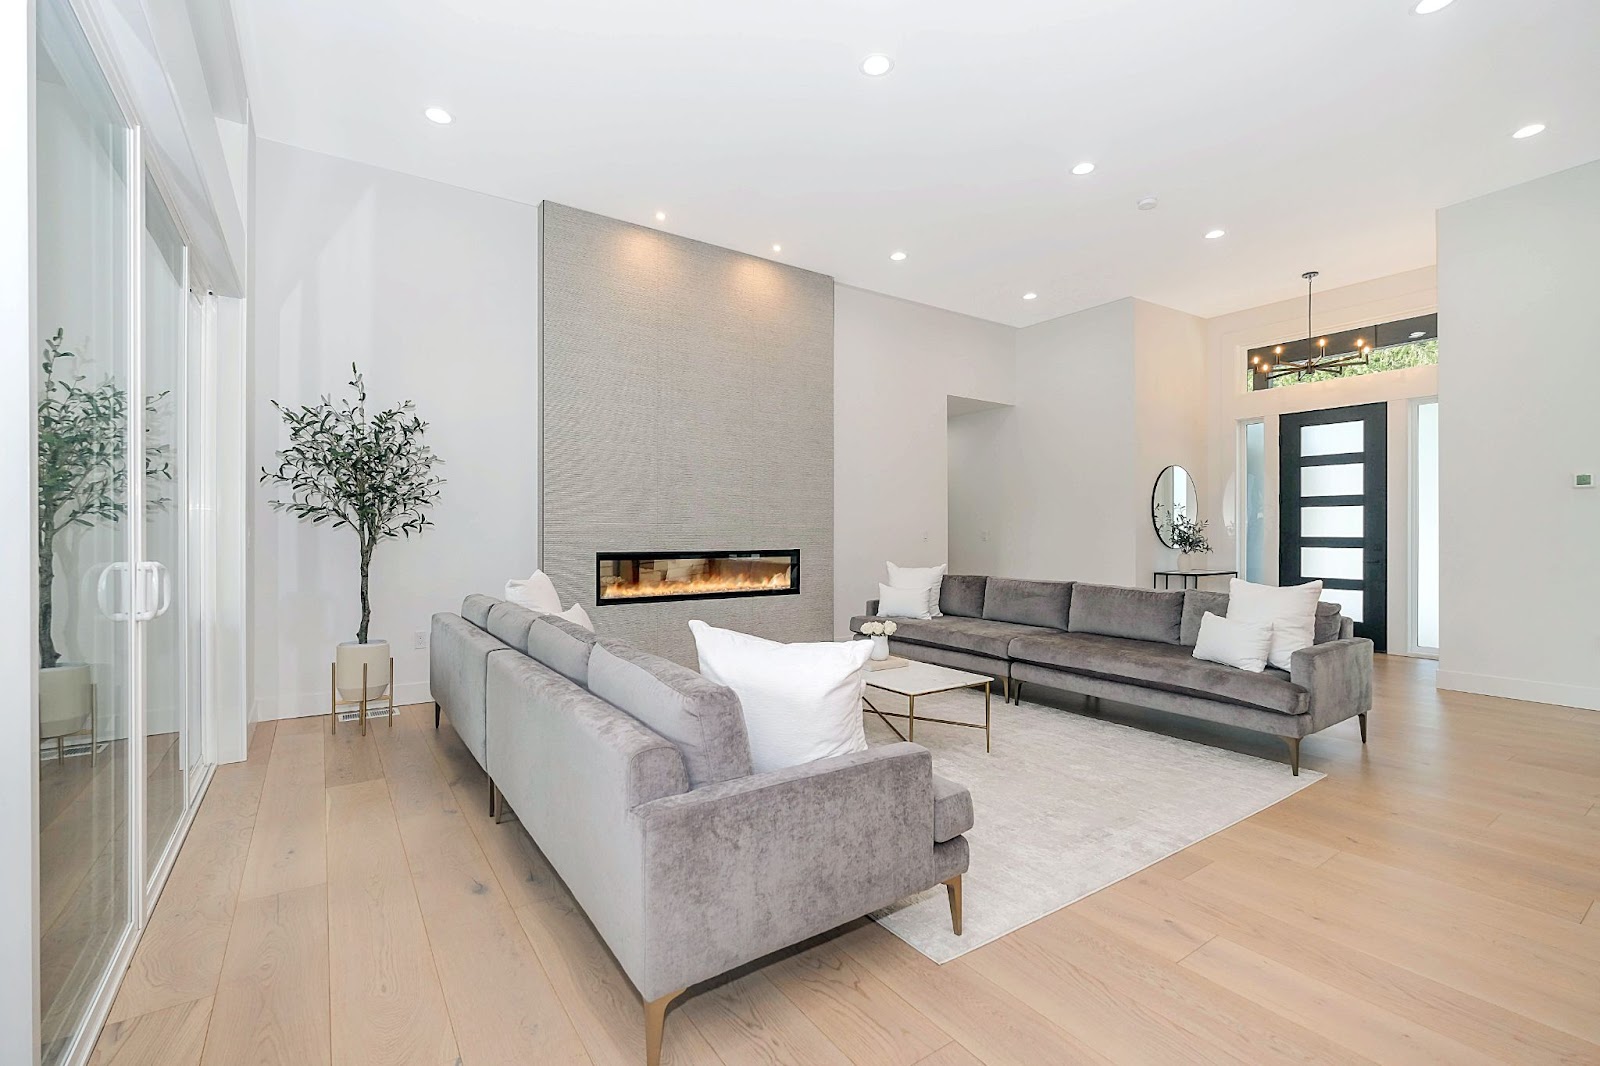 Modern living room in luxury home with white walls, light wood flooring and grey velvet sofas.